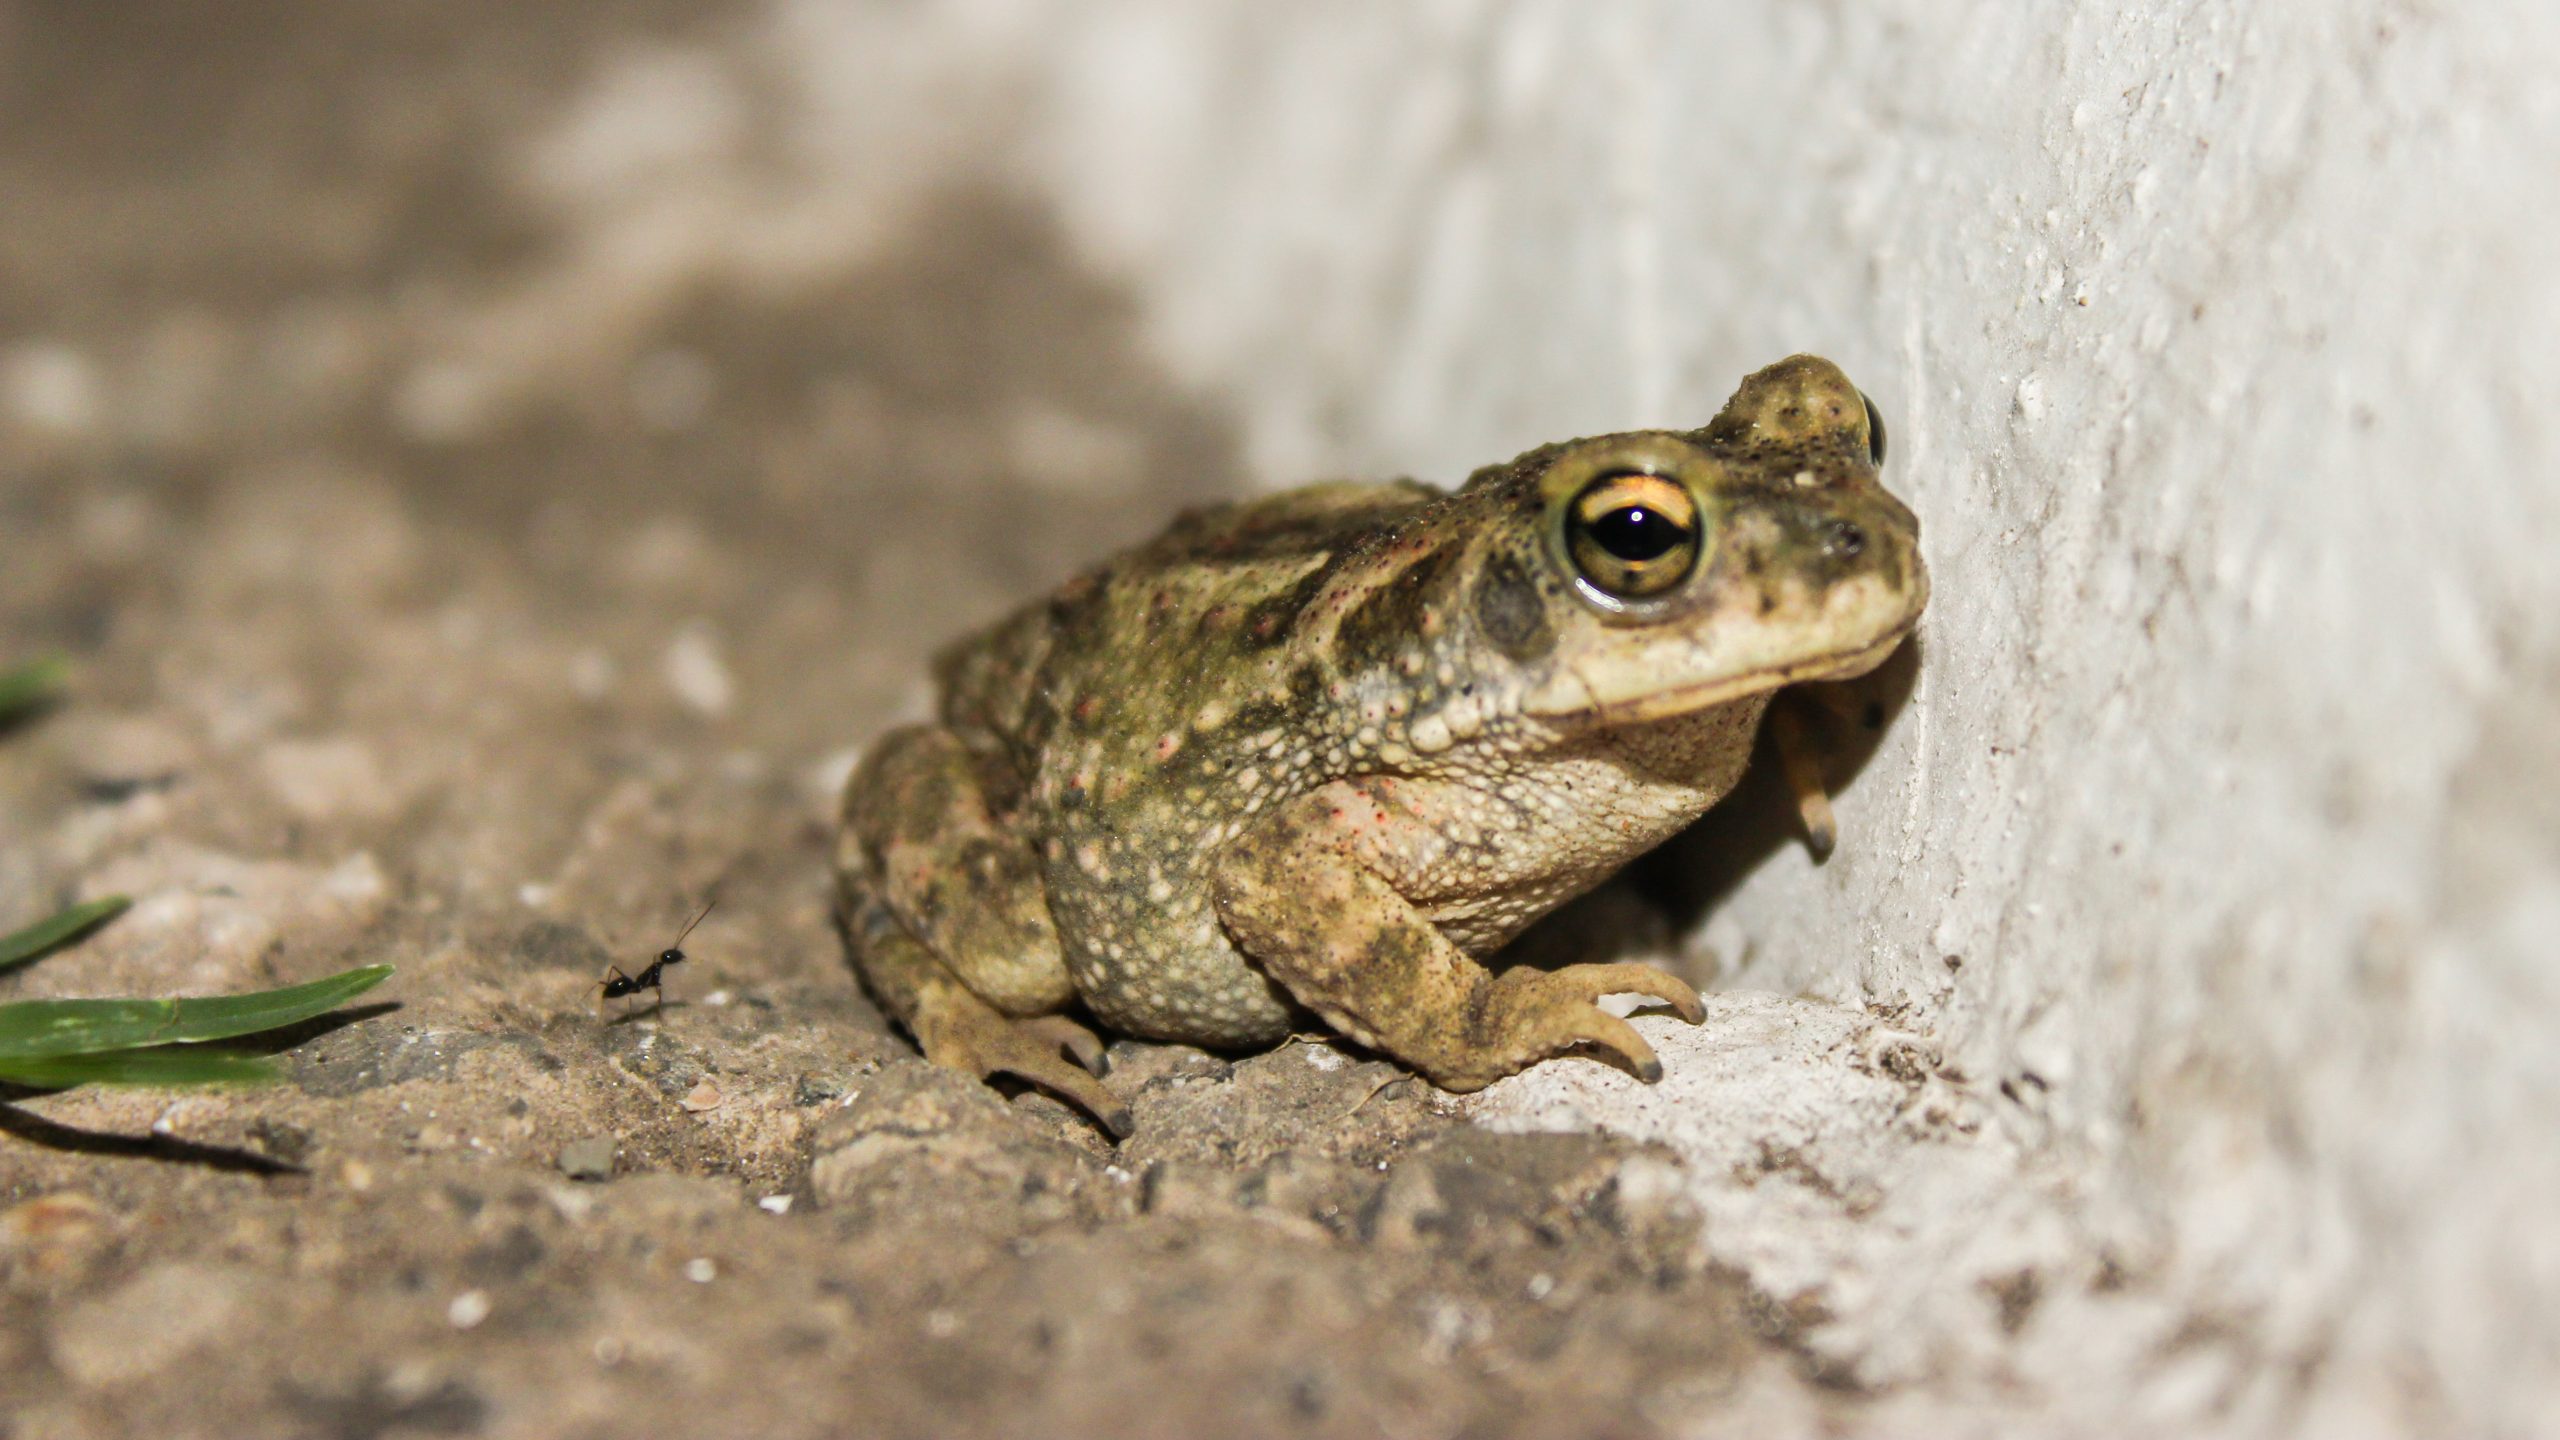 A frog near a wall